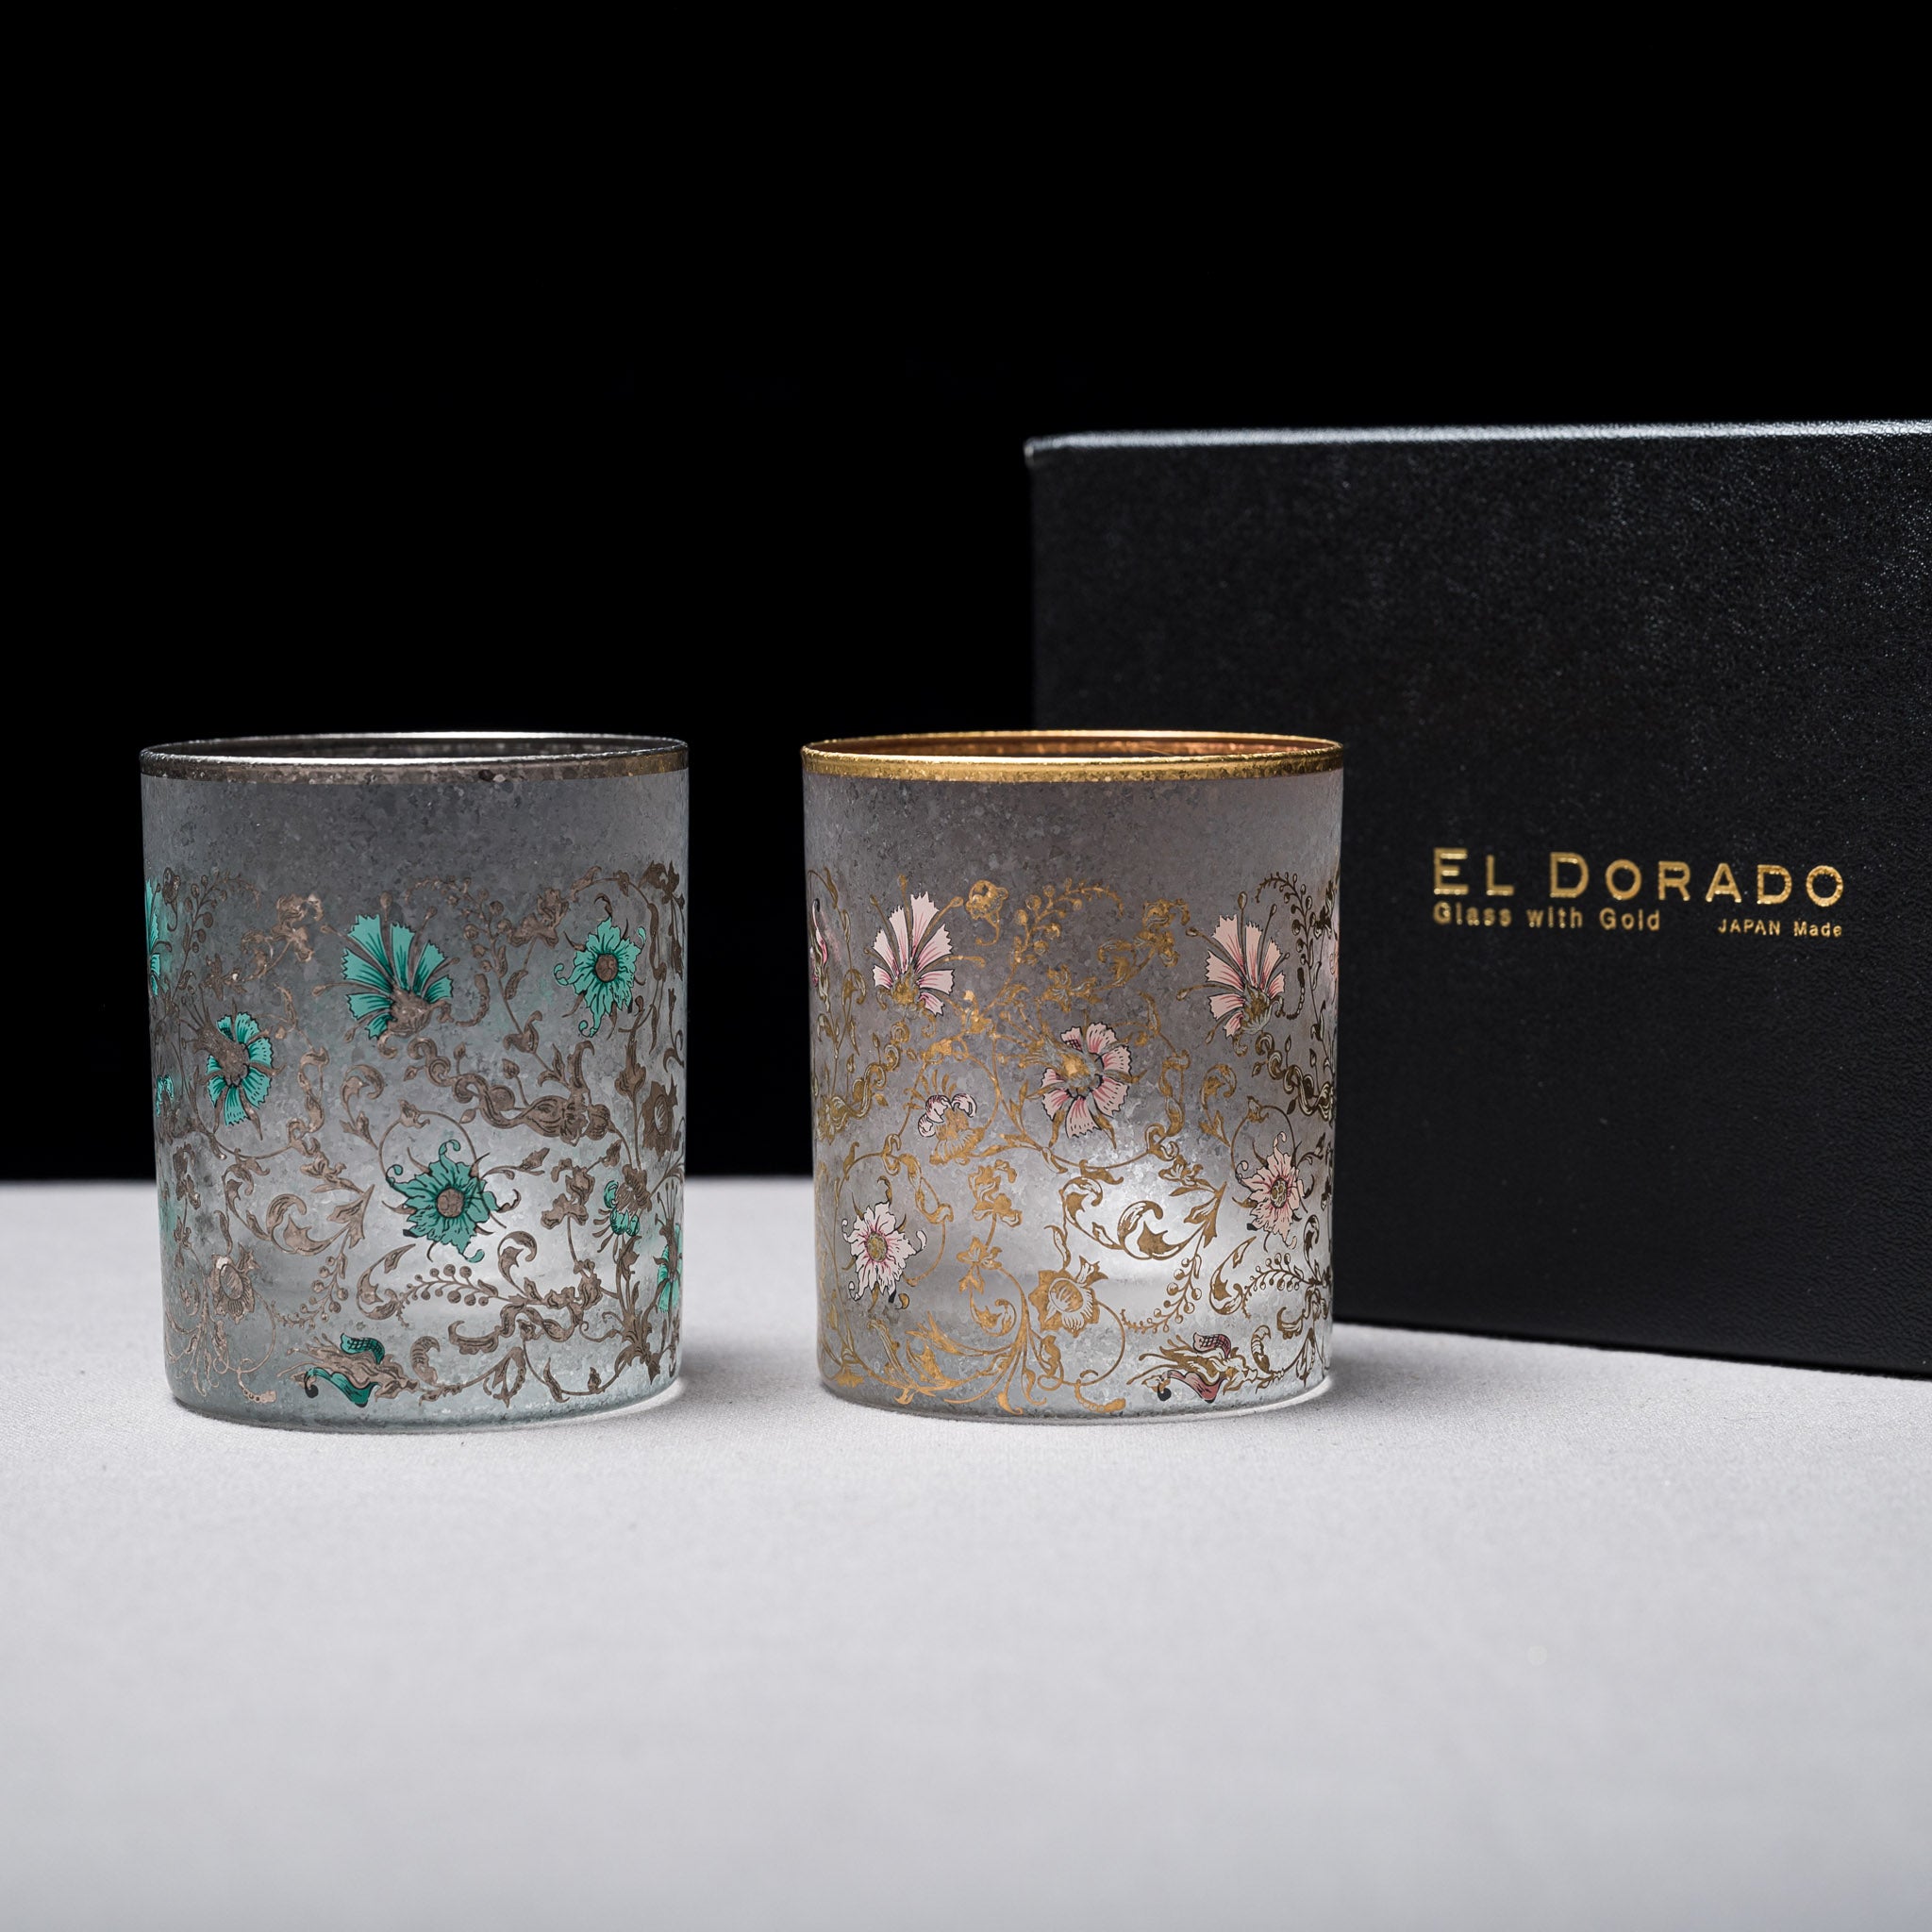 EL DORADO Pair Rock Glass - Set of 2 / エレガンス ペアロックグラス